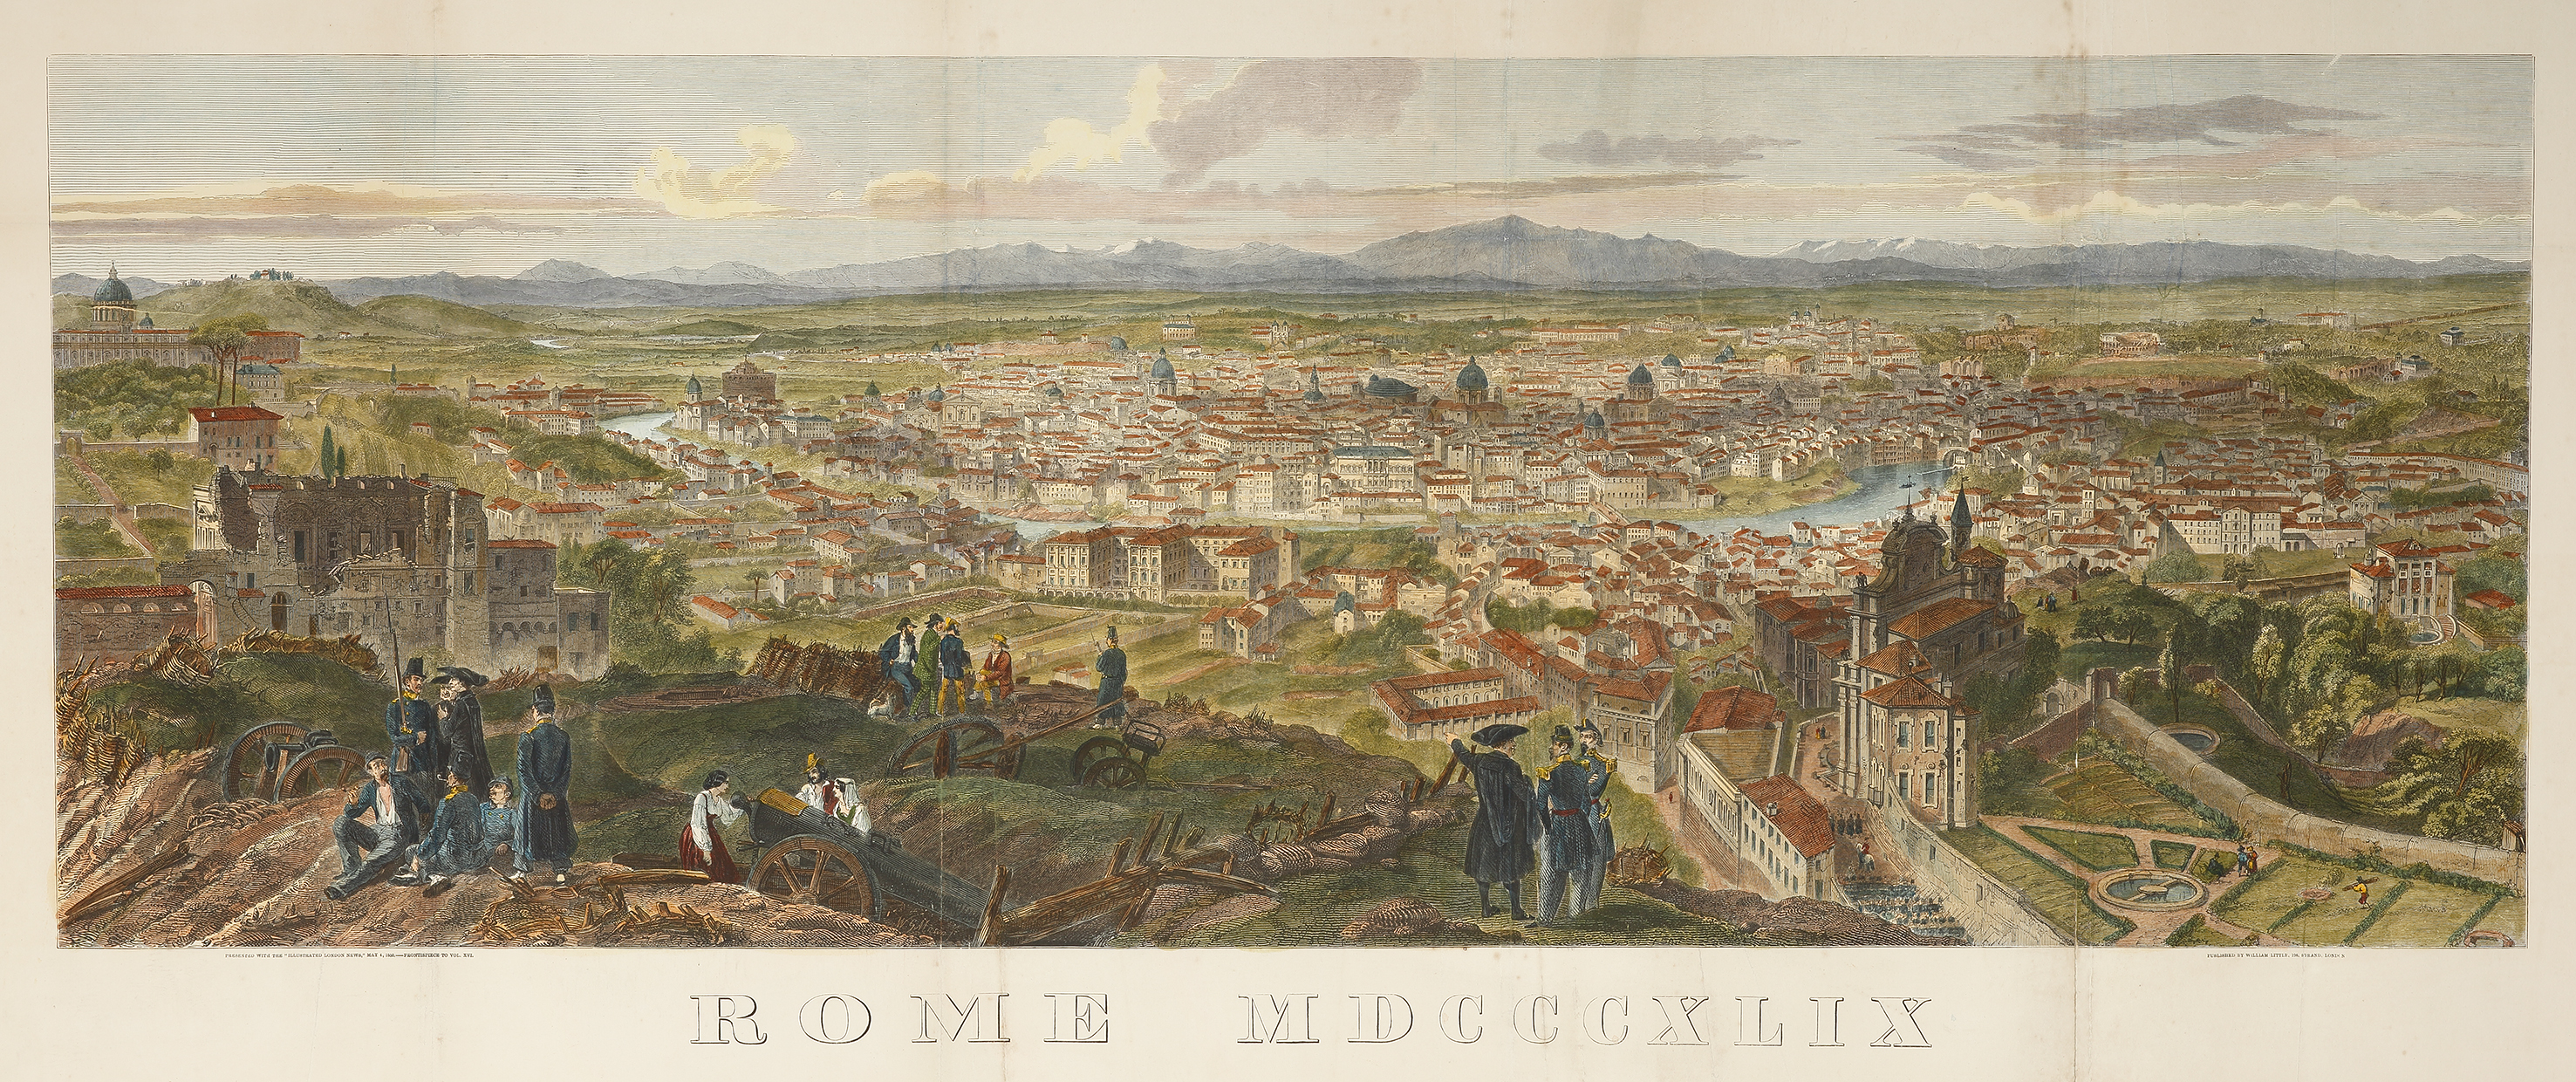 Rome MDCCCXLIX [1849] - Antique Print from 1850